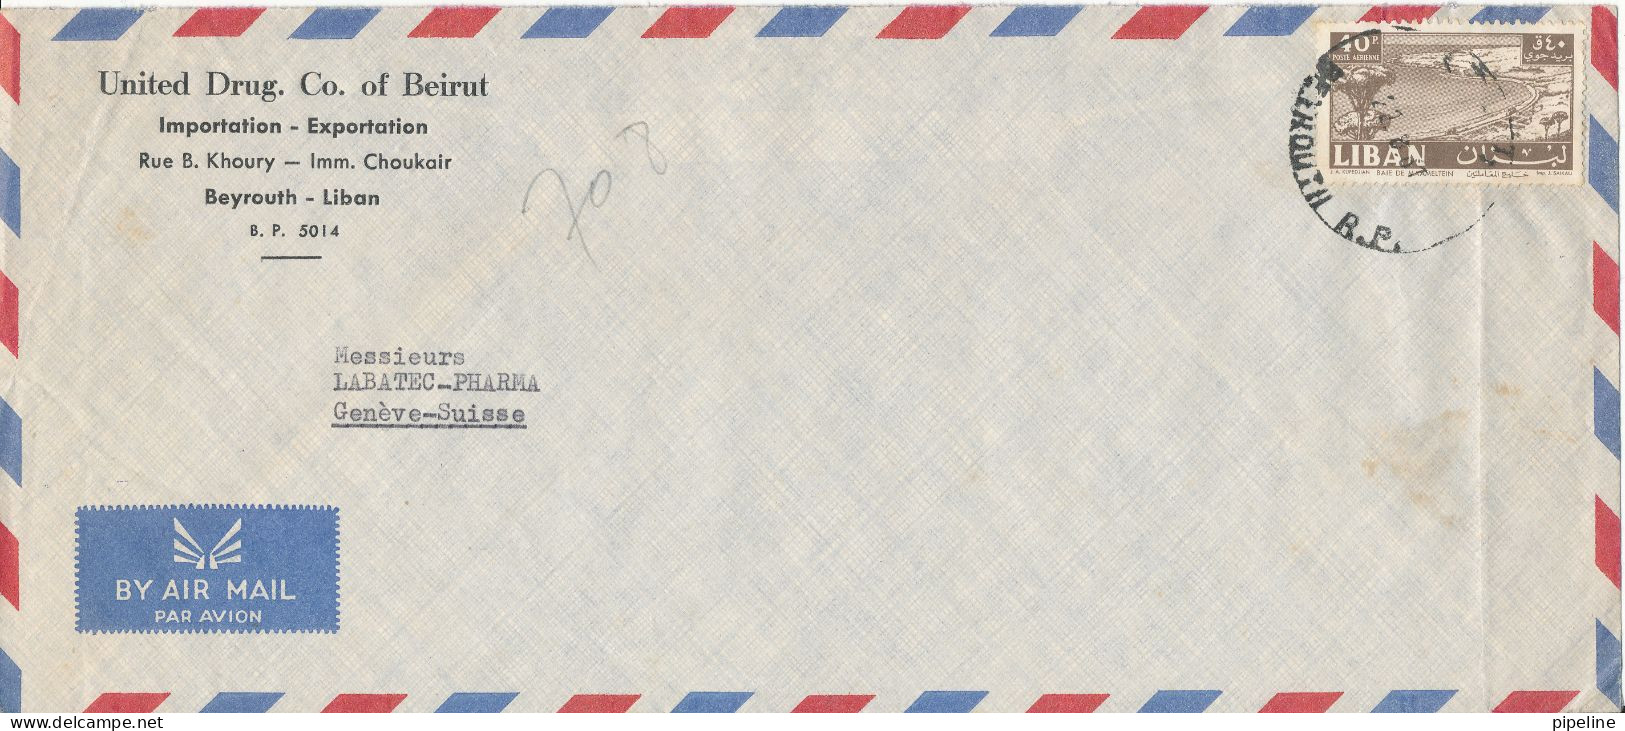 Lebanon Air Mail Cover Sent To Switzerland 22-8-1961 Single Franked - Lebanon